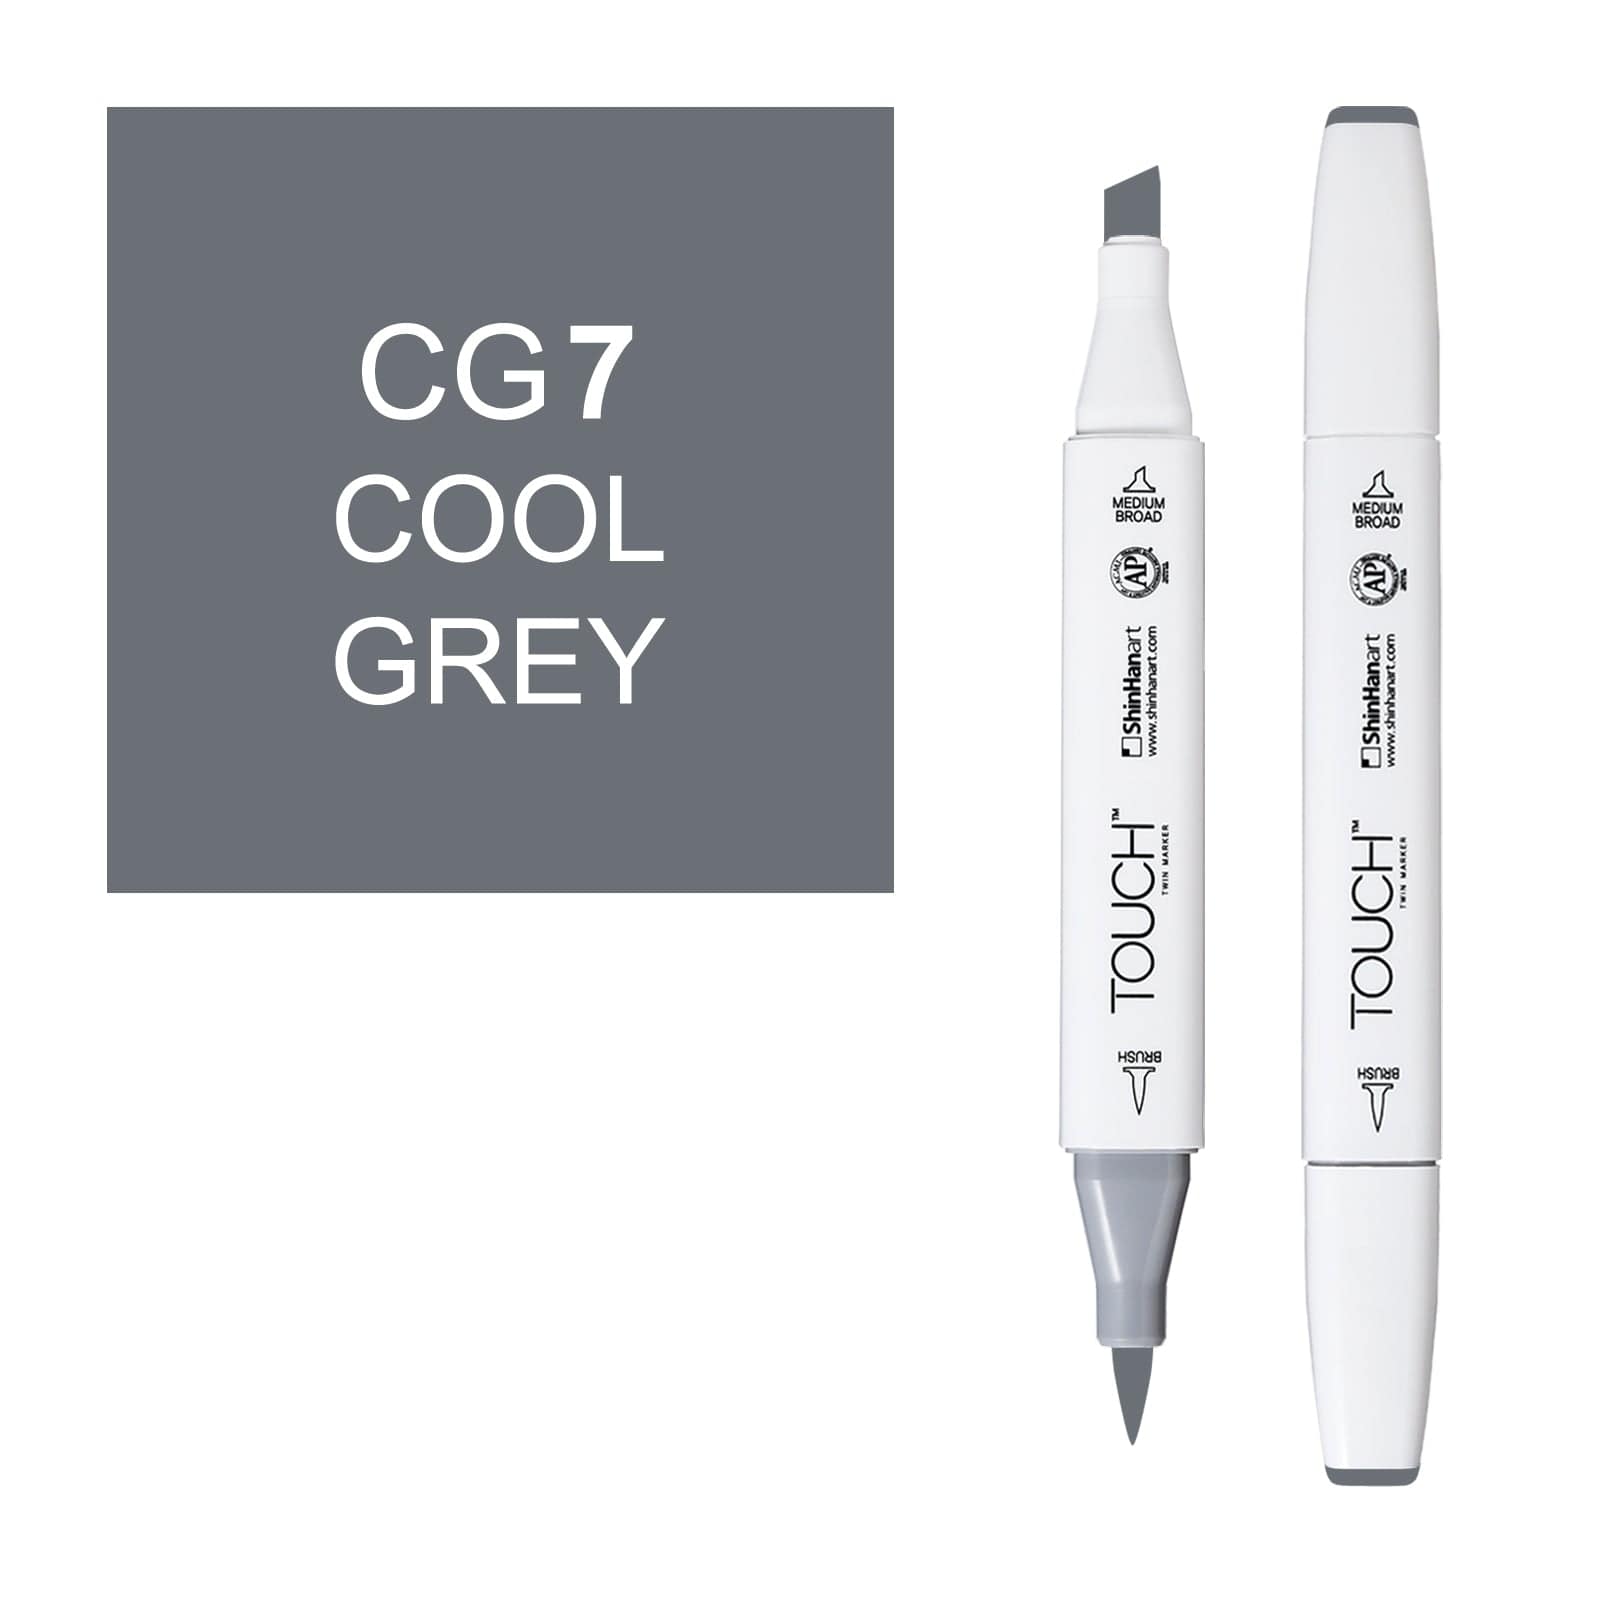 ShinHanart Touch Twin Brush Markers 7 Cool grey